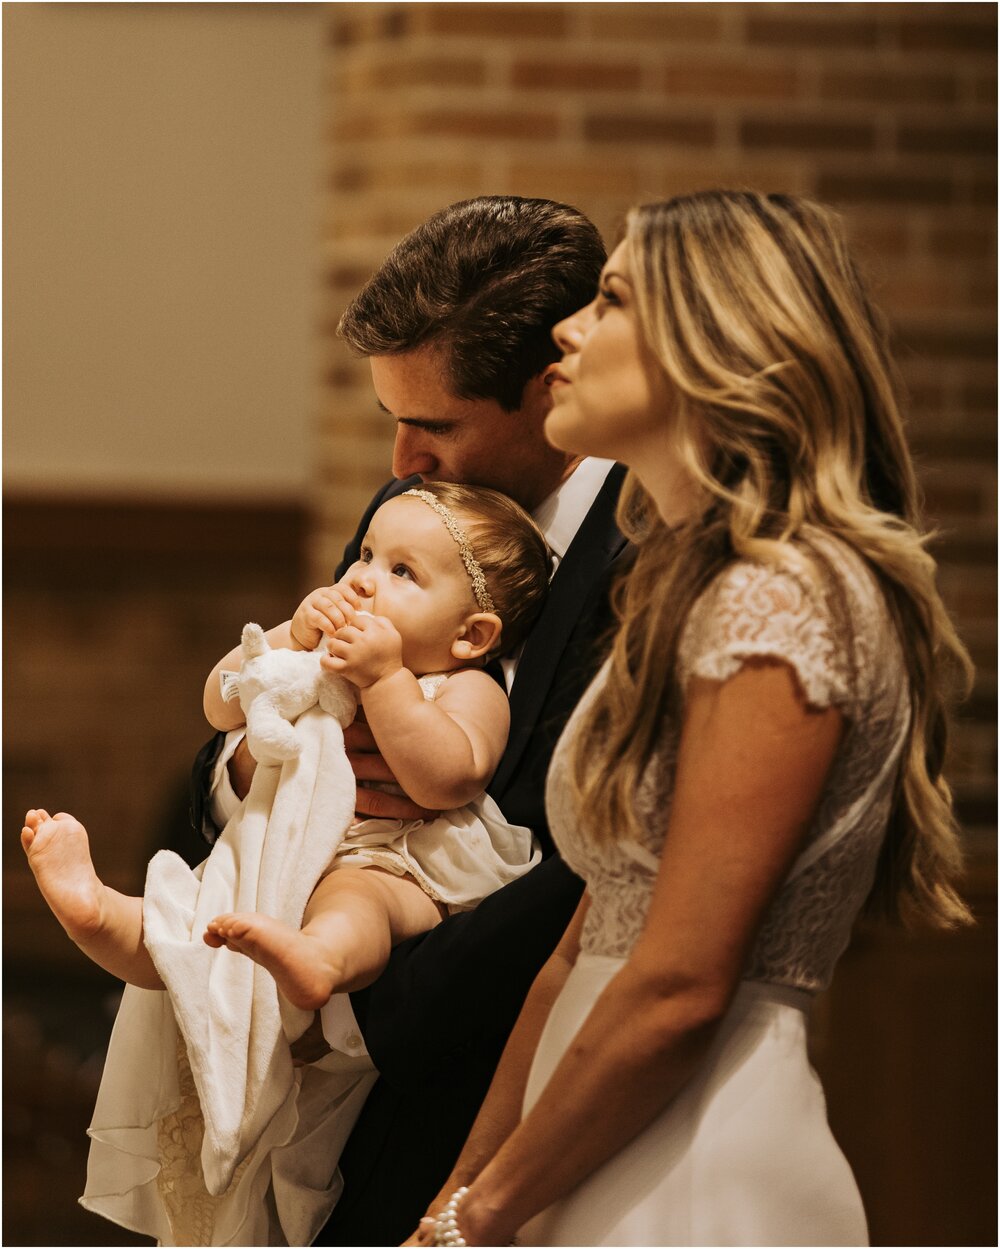 Mire-Blessing-Baptism-Family-2018-June-8524_quaint-and-whim-lifestyle-photographer-louisiana-.jpg